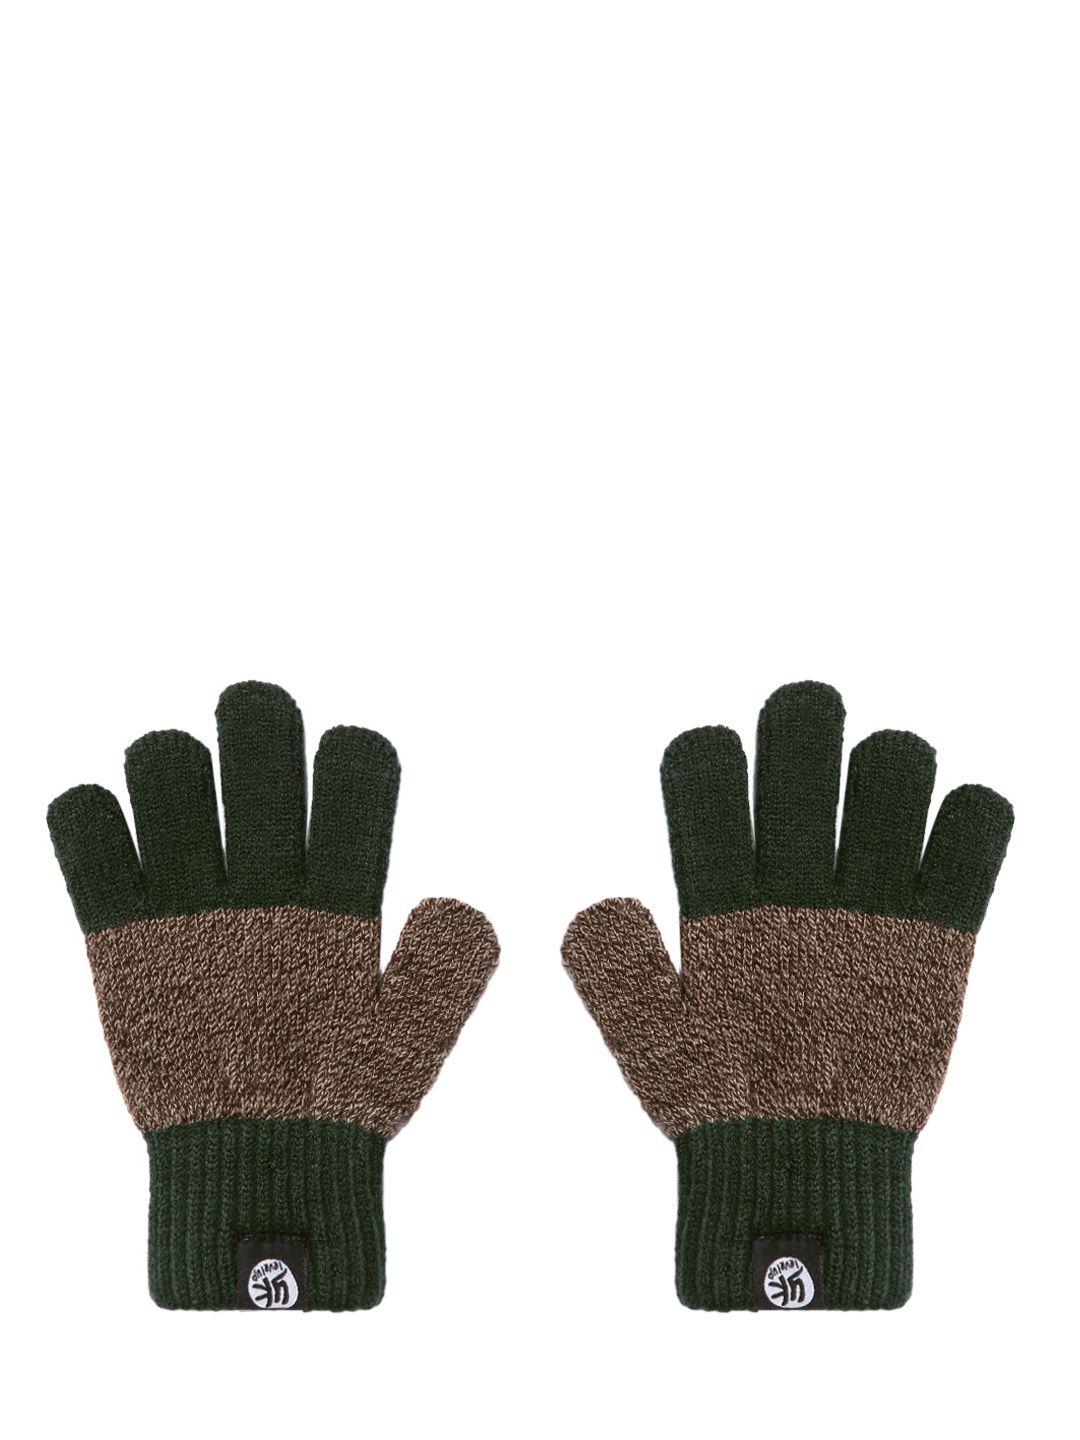 yk kids brown & olive green colourblocked hand gloves